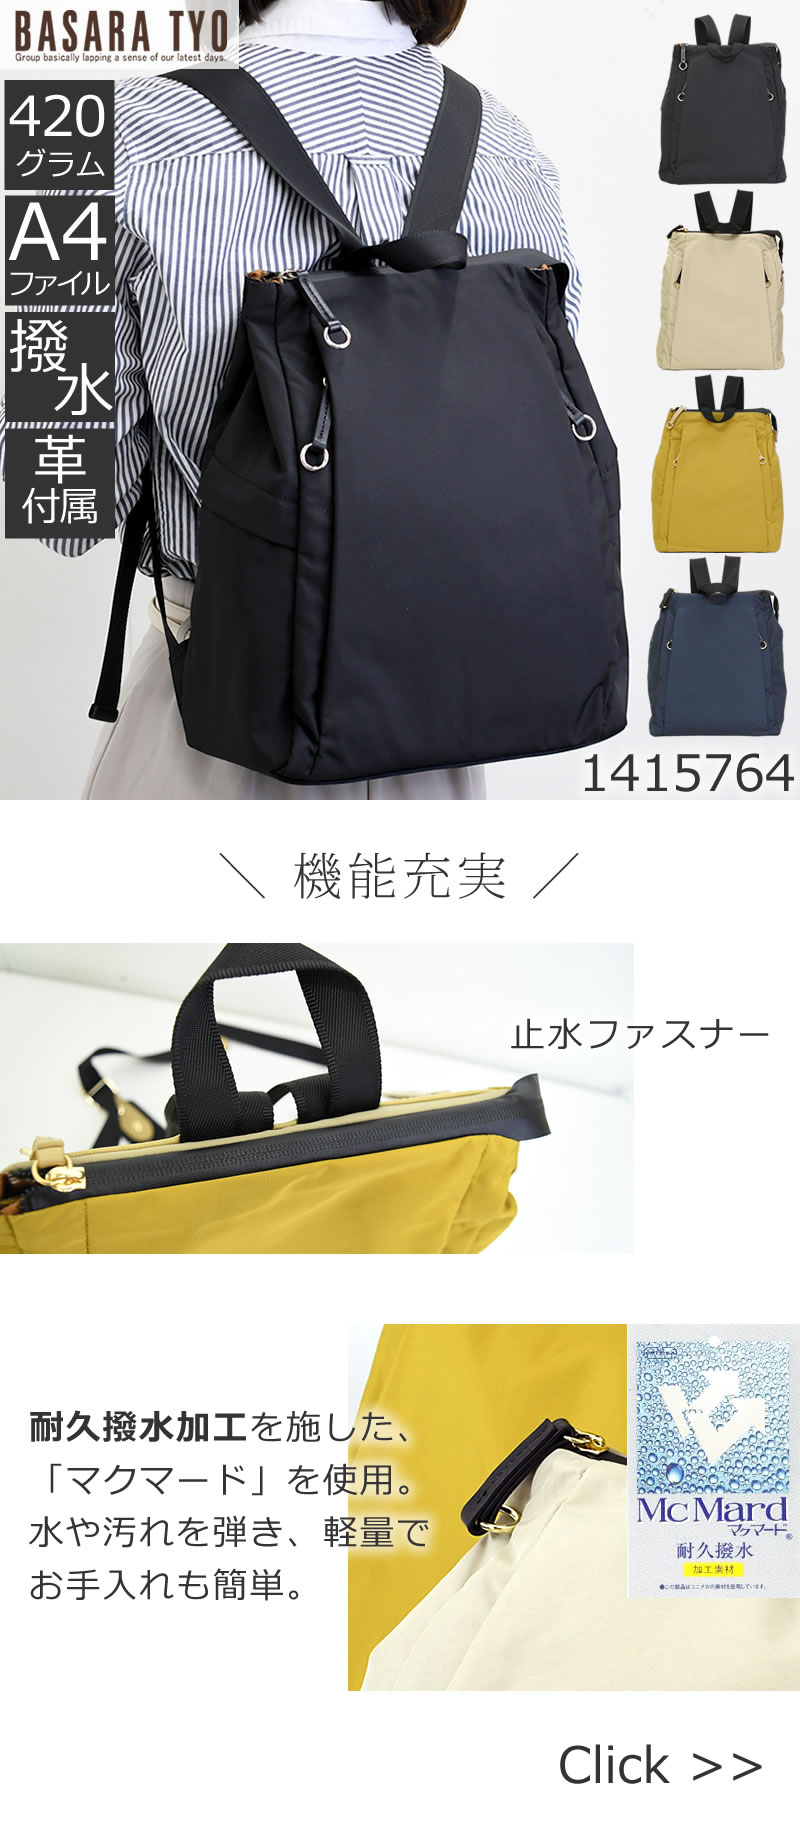 basara(バサラ)new機能充実軽量撥水リュック1415764目々澤鞄